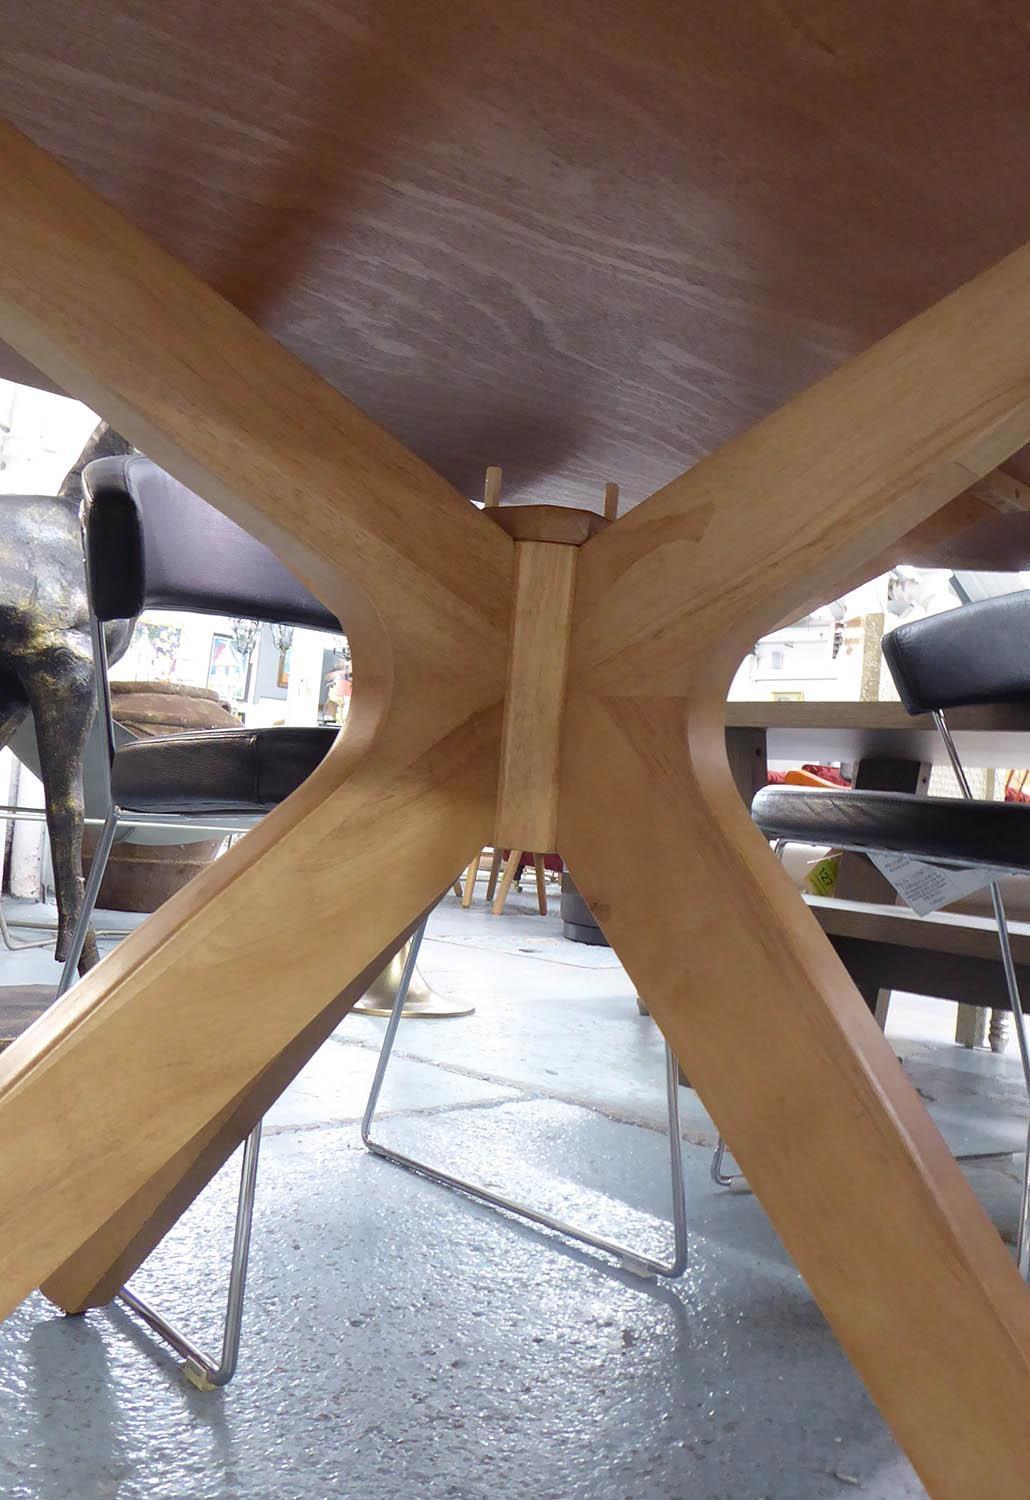 DINING TABLE, contemporary design, 190cm x 111cm x 75cm. - Image 4 of 4